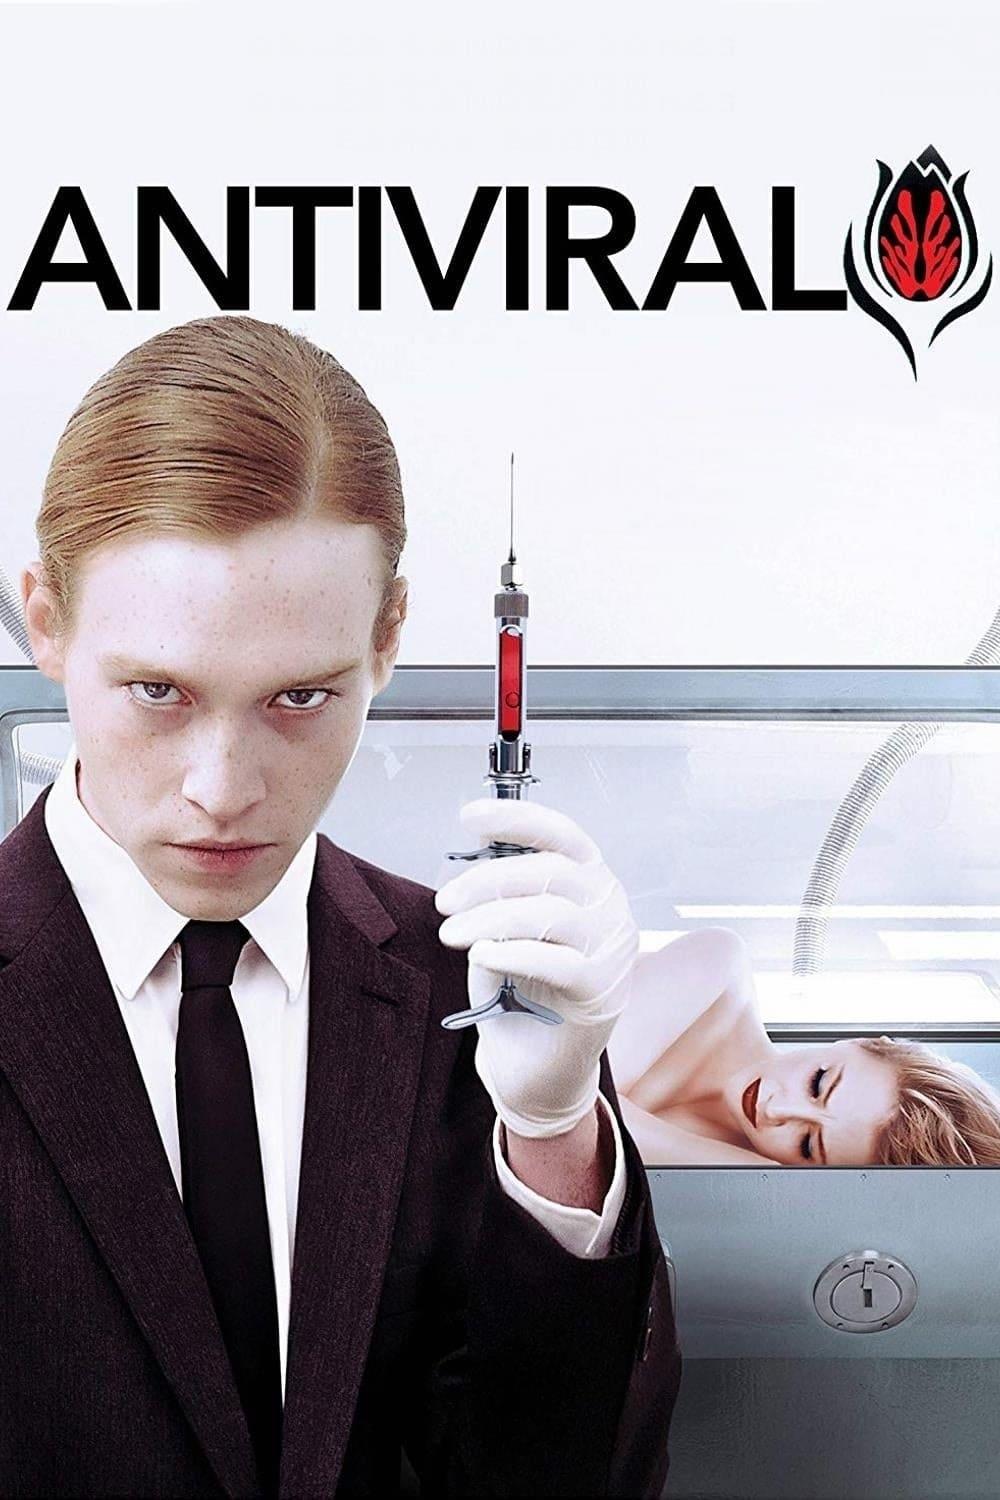 Antiviral poster